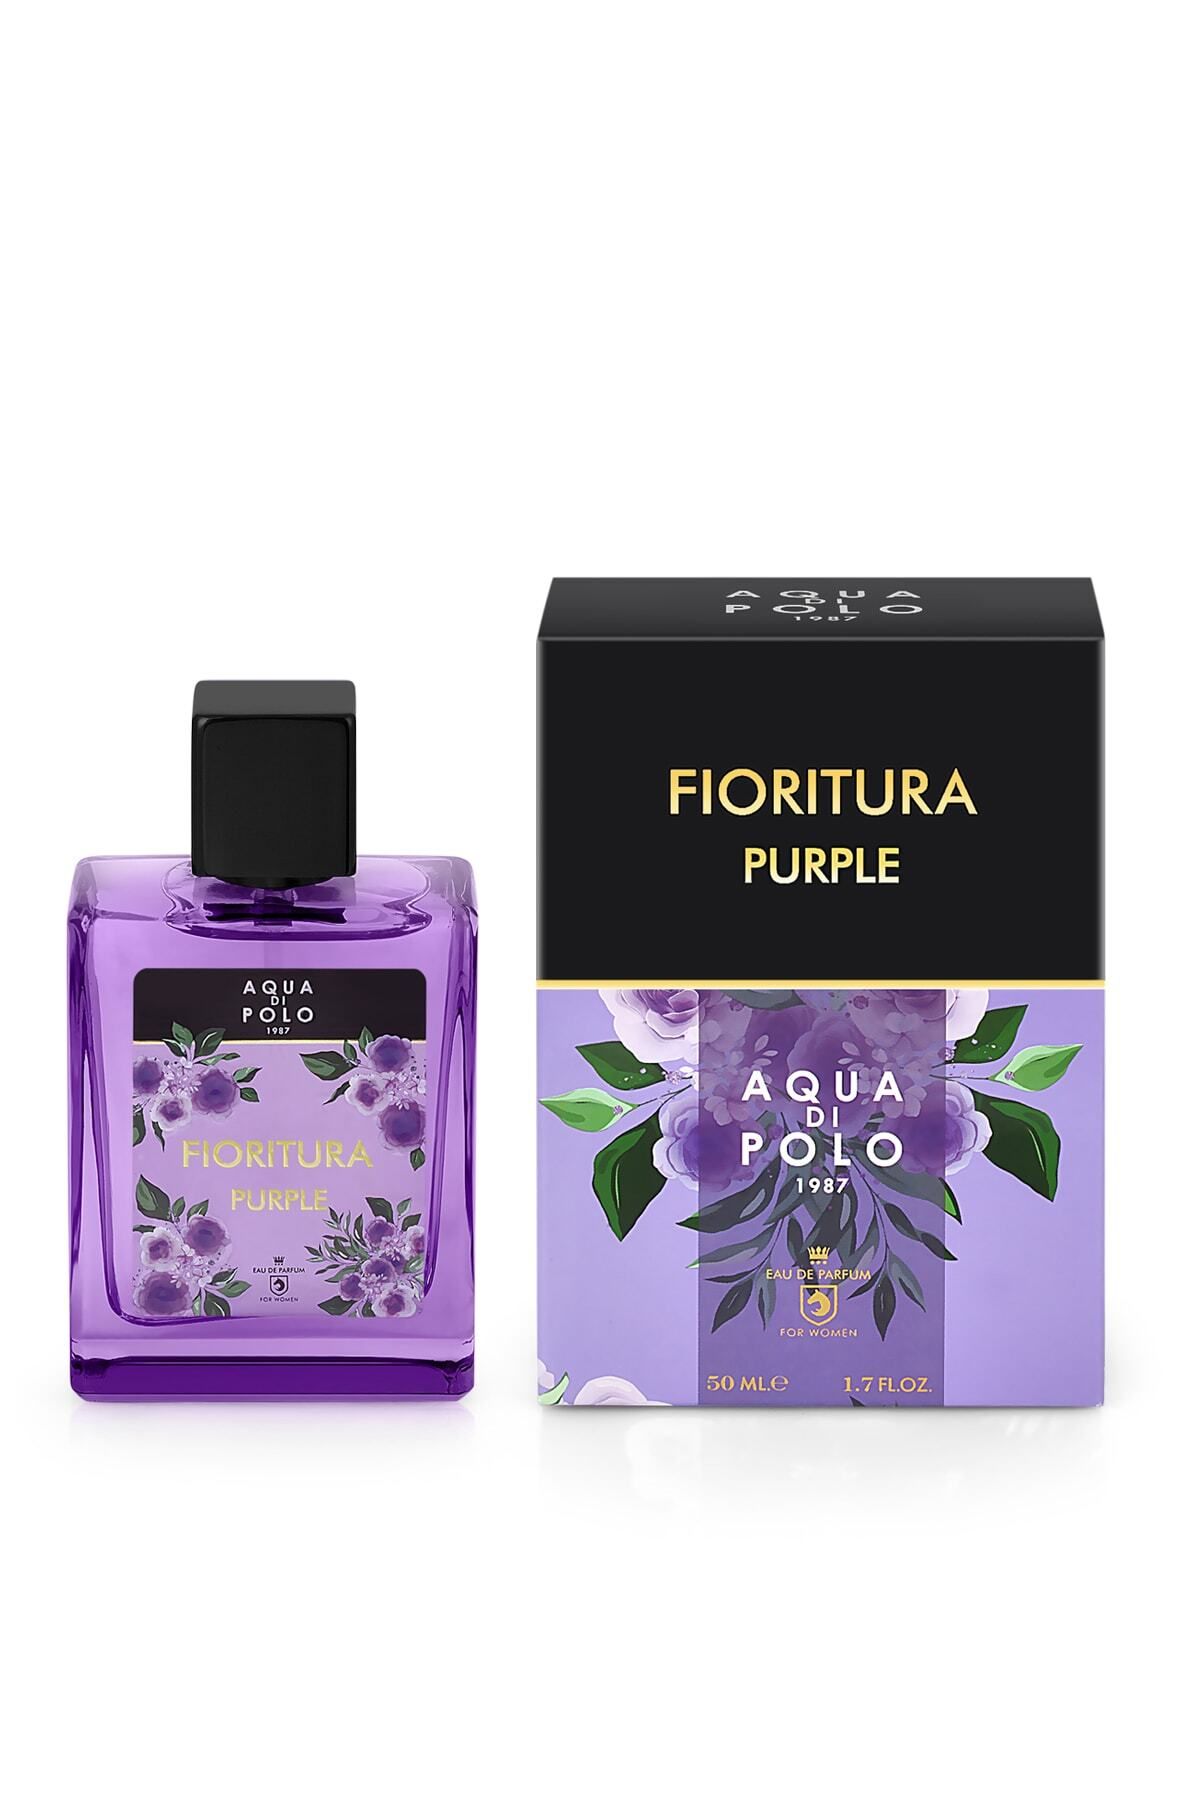 Aqua Di Polo 1987 Aqua Di Polo Fioritura Purple 50 Ml Edp Kadın Parfüm Apcn003003